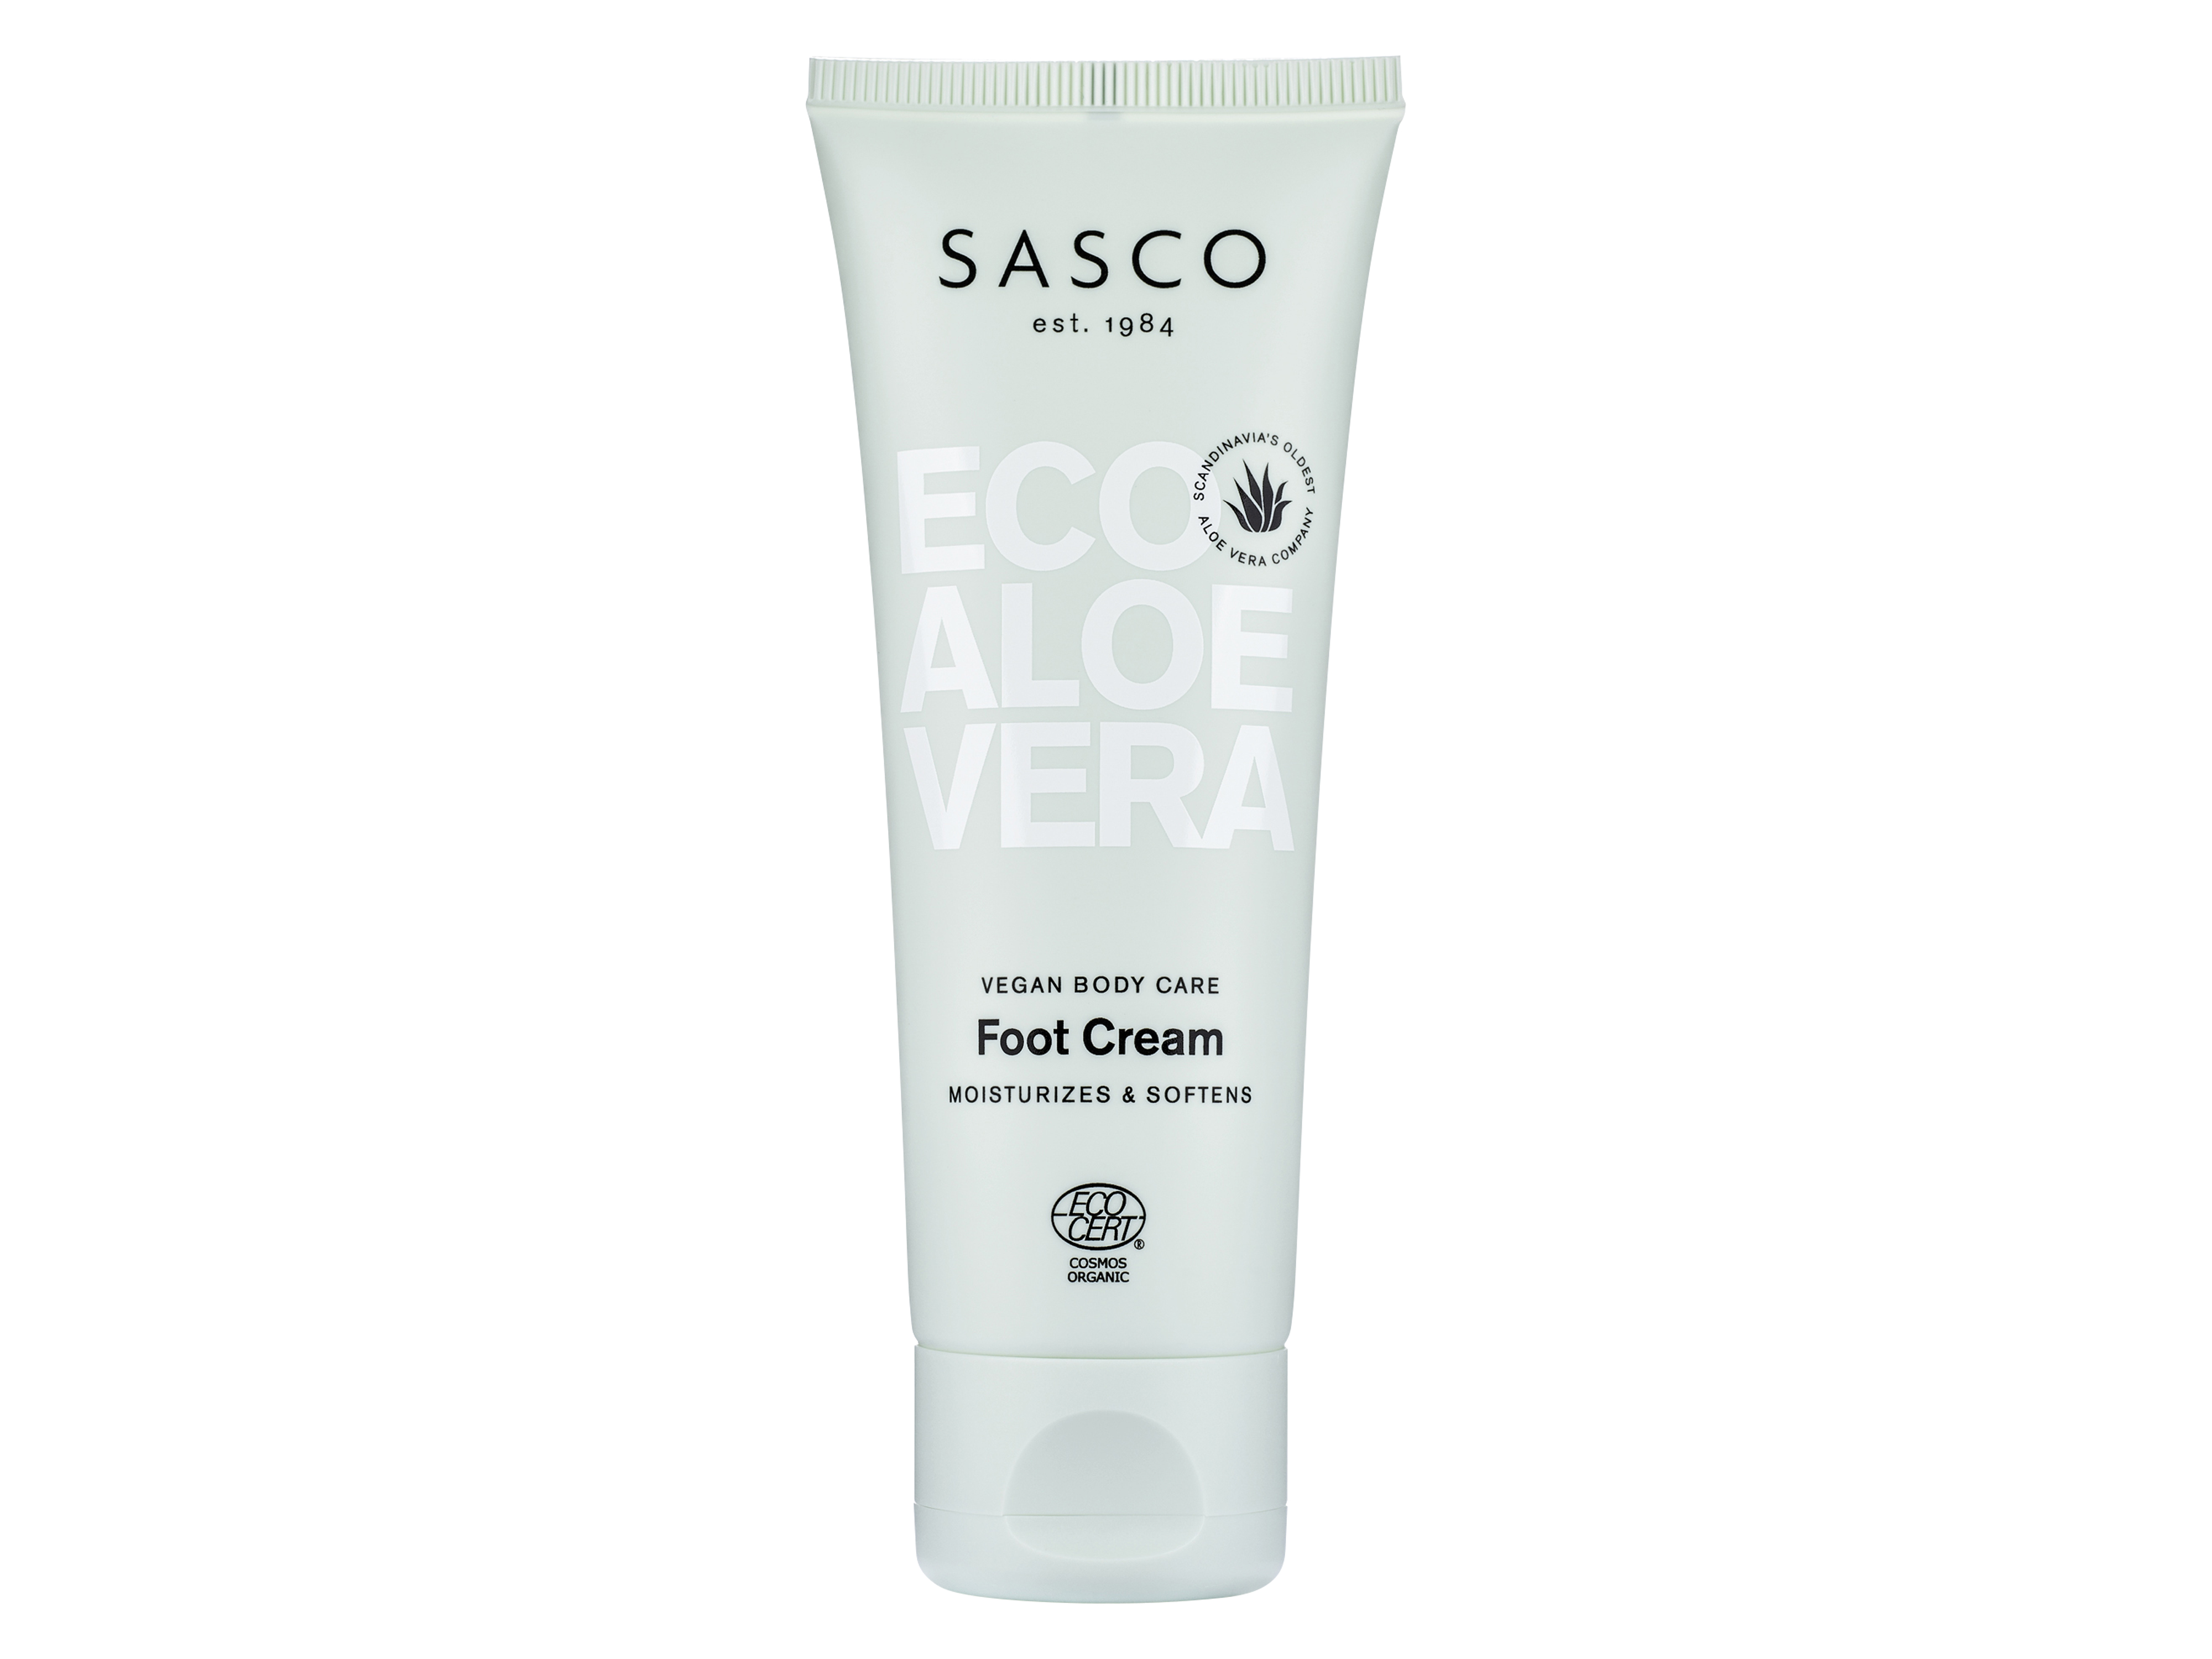 Sasco Eco Aloe Vera Foot Cream, 75 ml